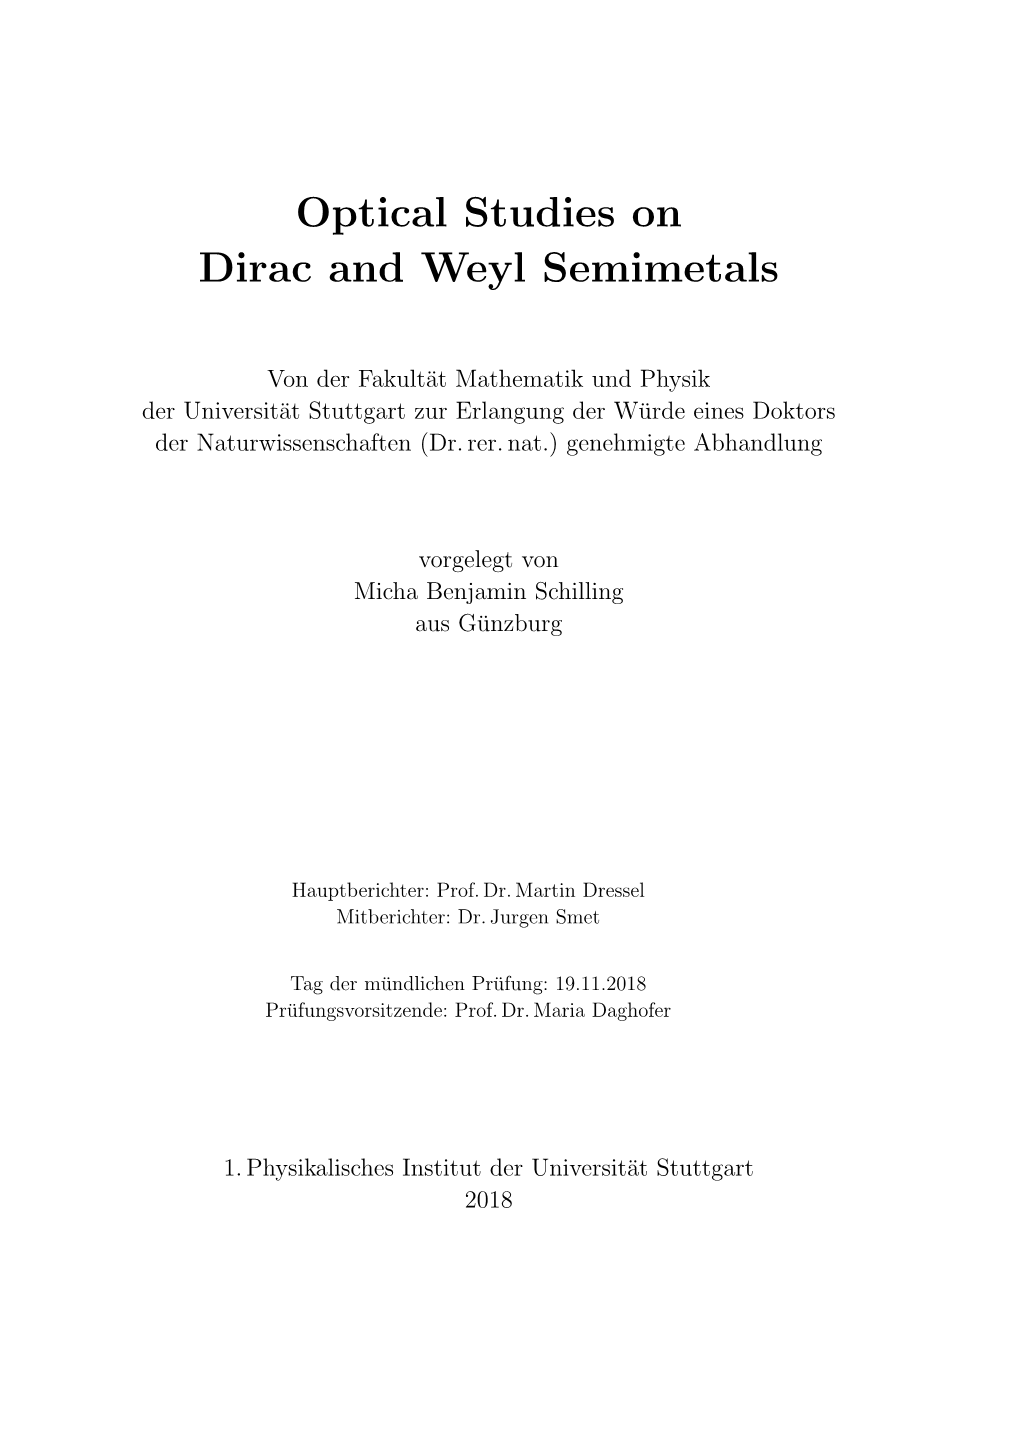 Optical Studies on Dirac and Weyl Semimetals